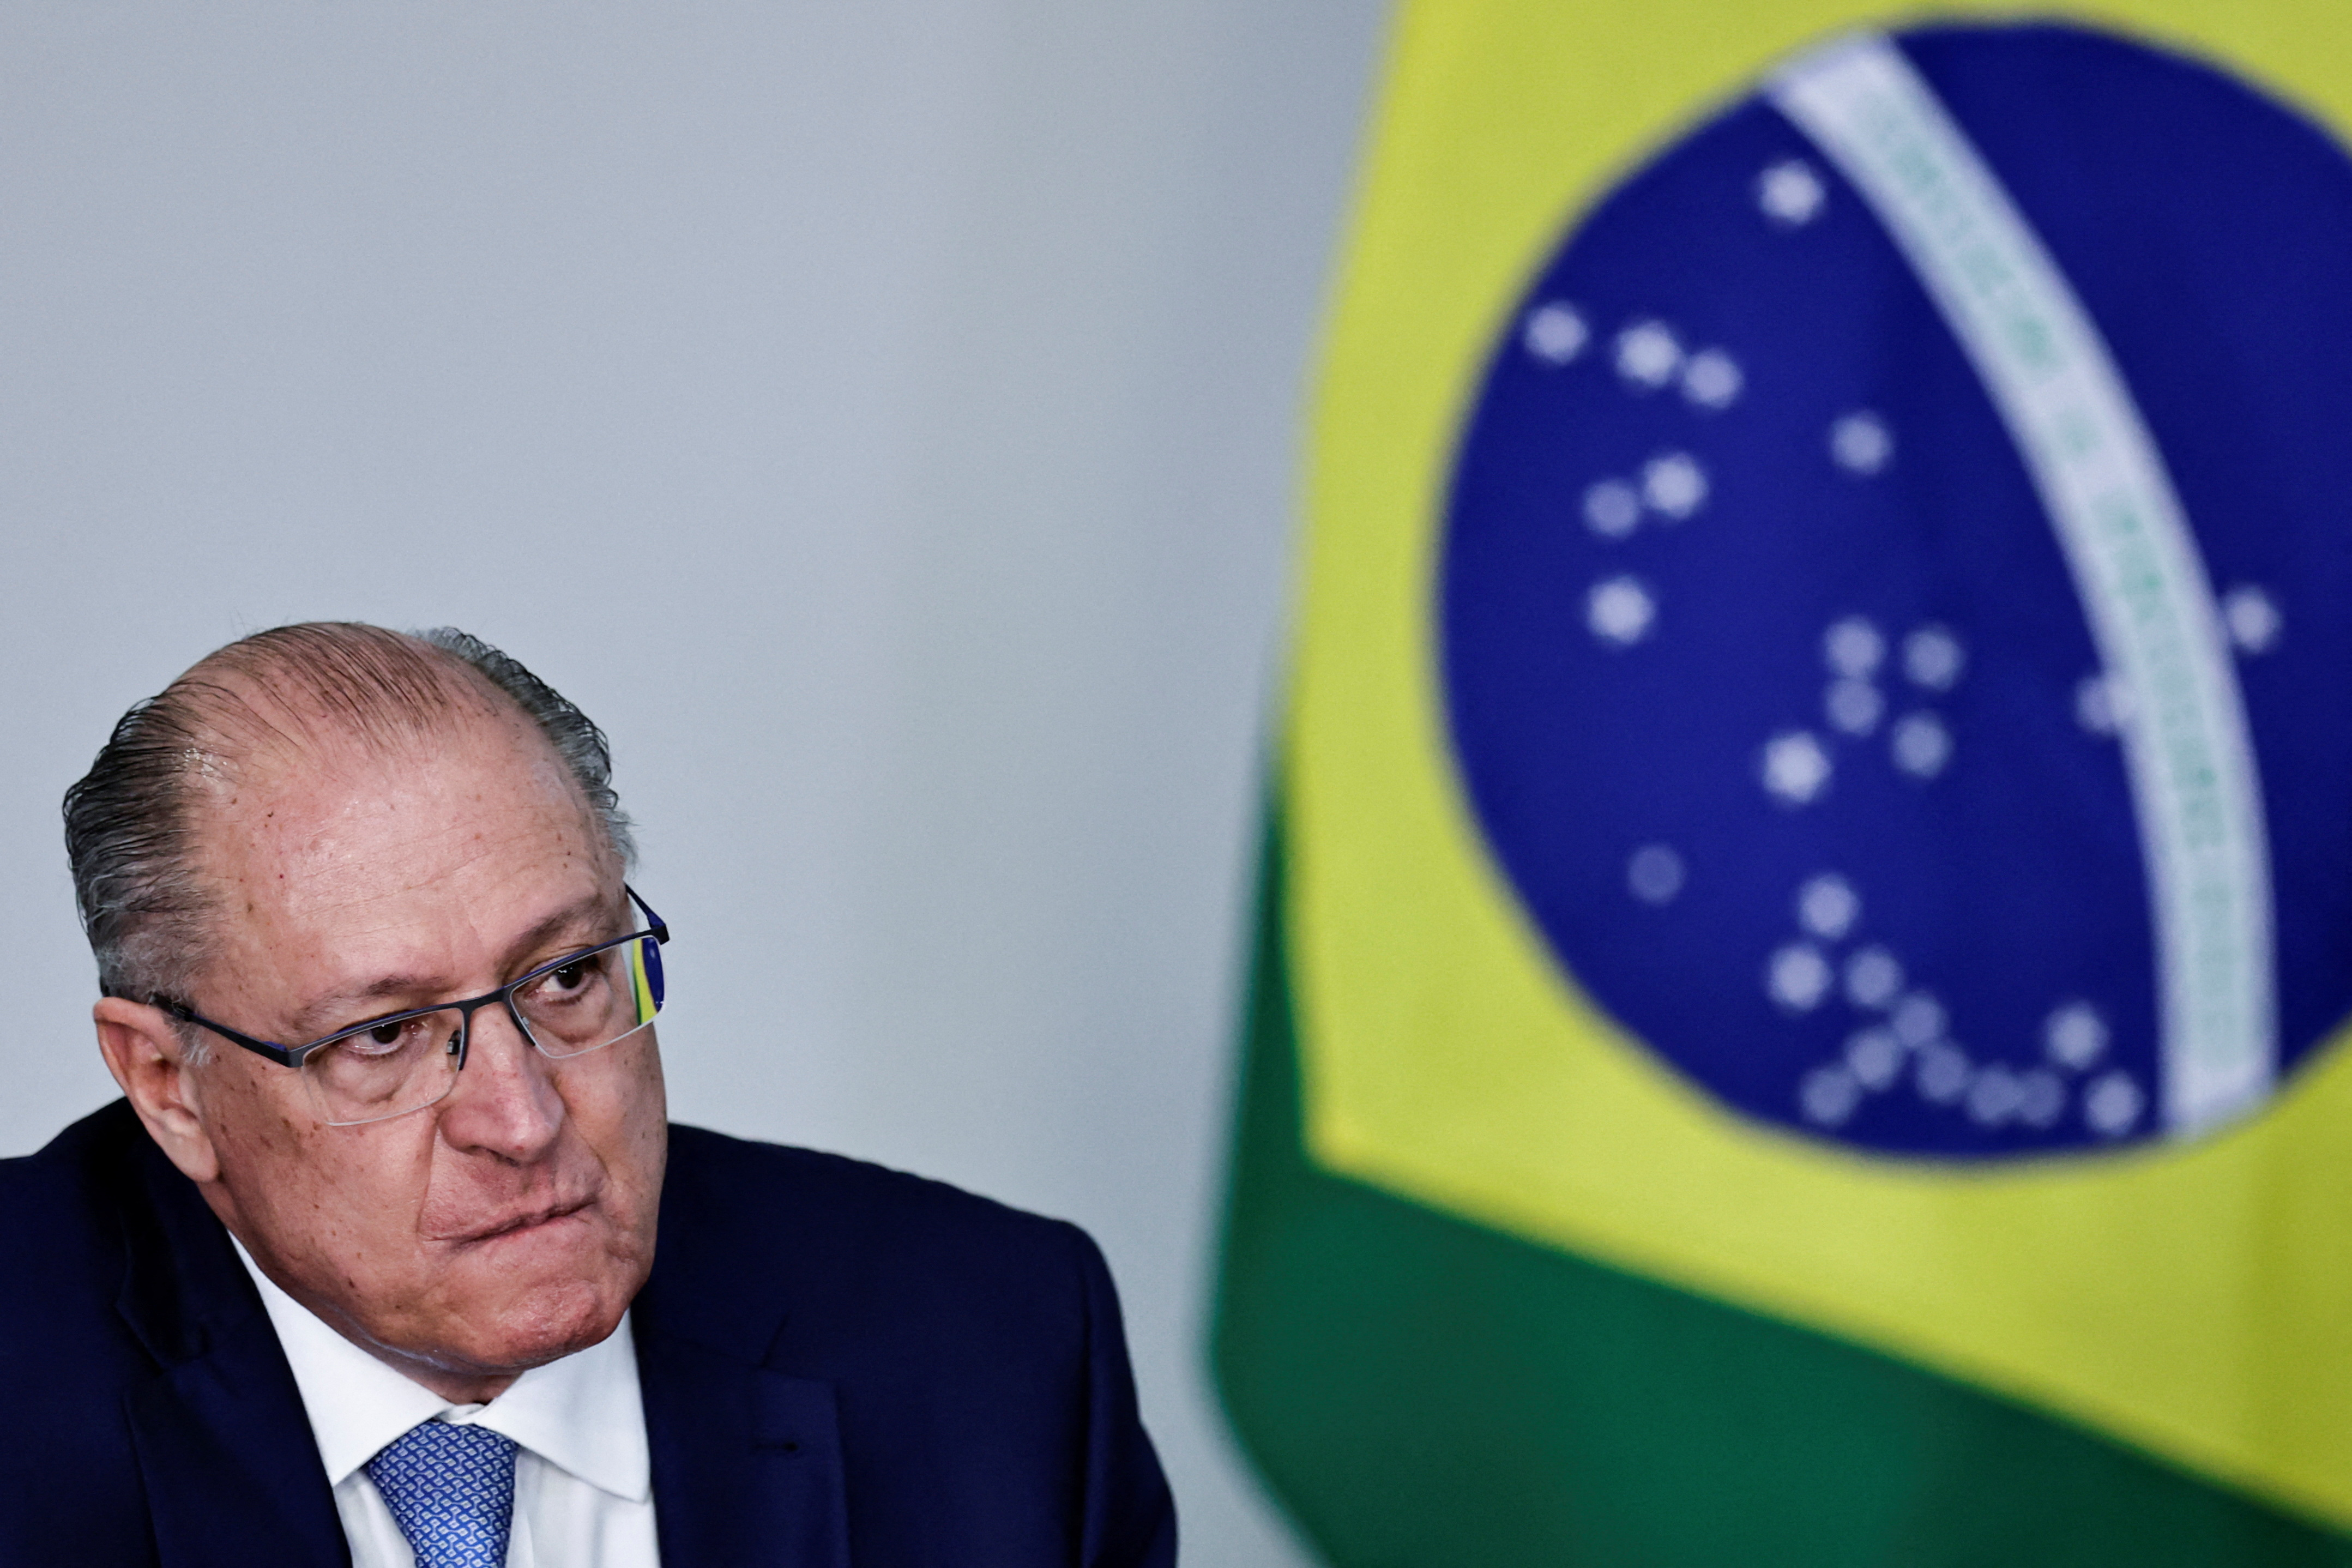 Brazil's Vice President Geraldo Alckmin reacts during a meeting between Brazil's President Luiz Inacio Lula da Silva and auto industry leaders, in Brasilia